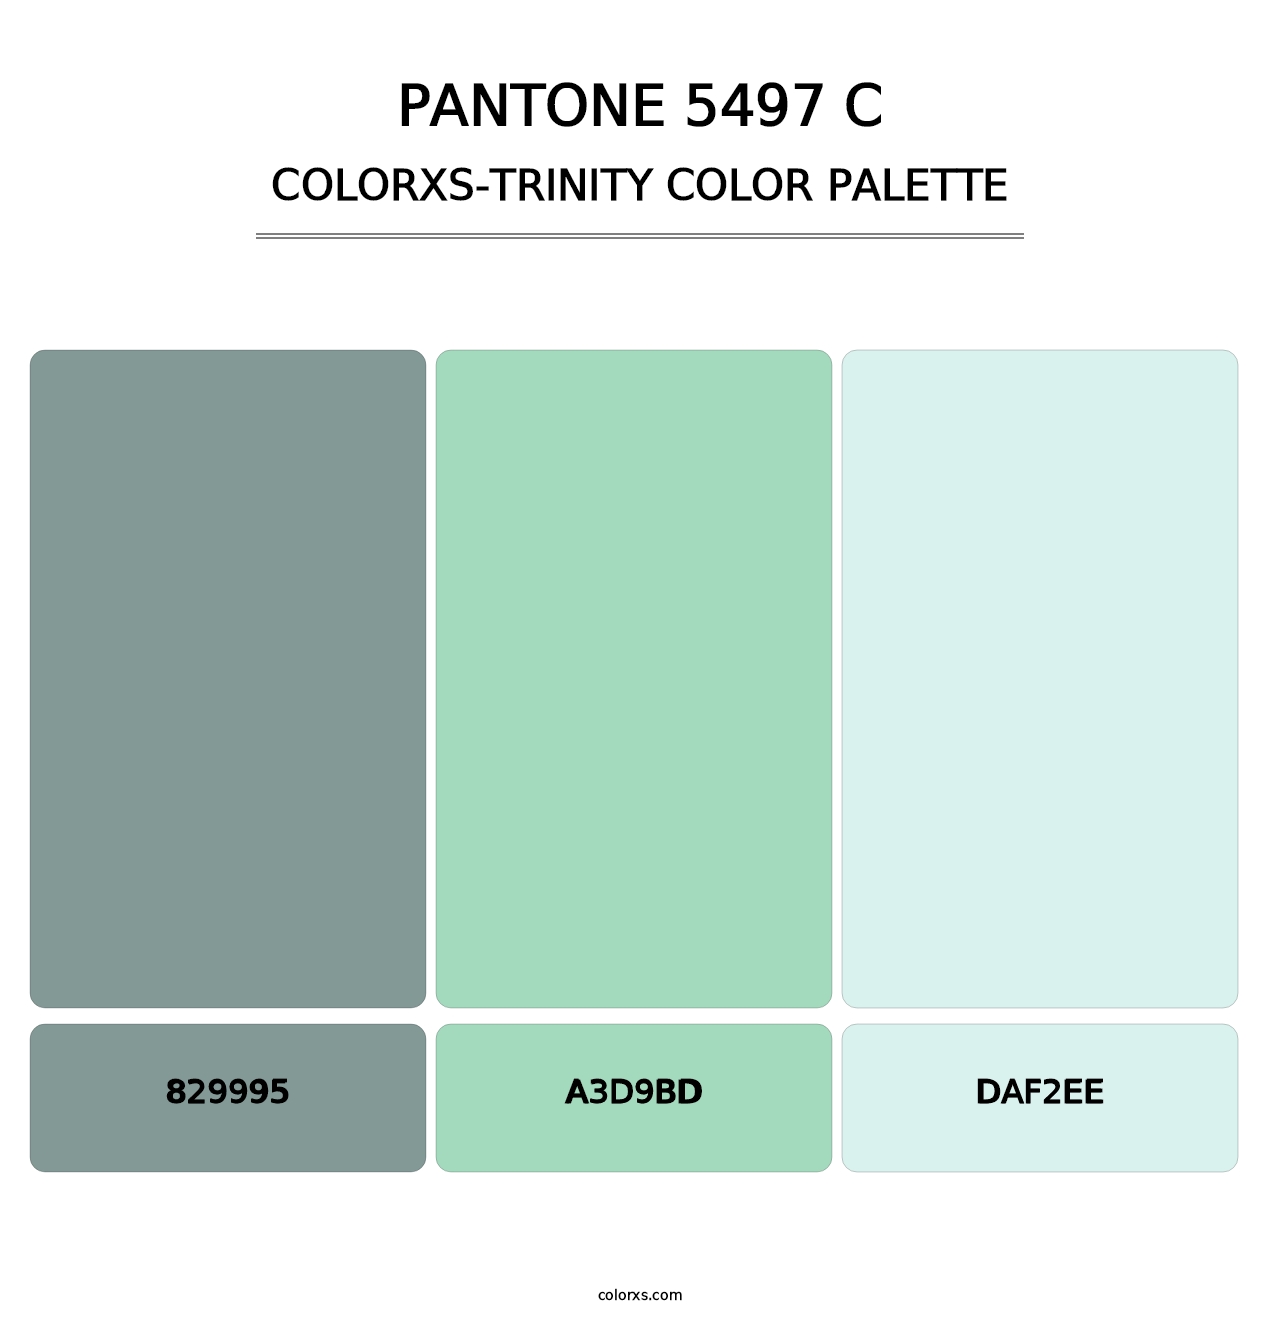 PANTONE 5497 C - Colorxs Trinity Palette